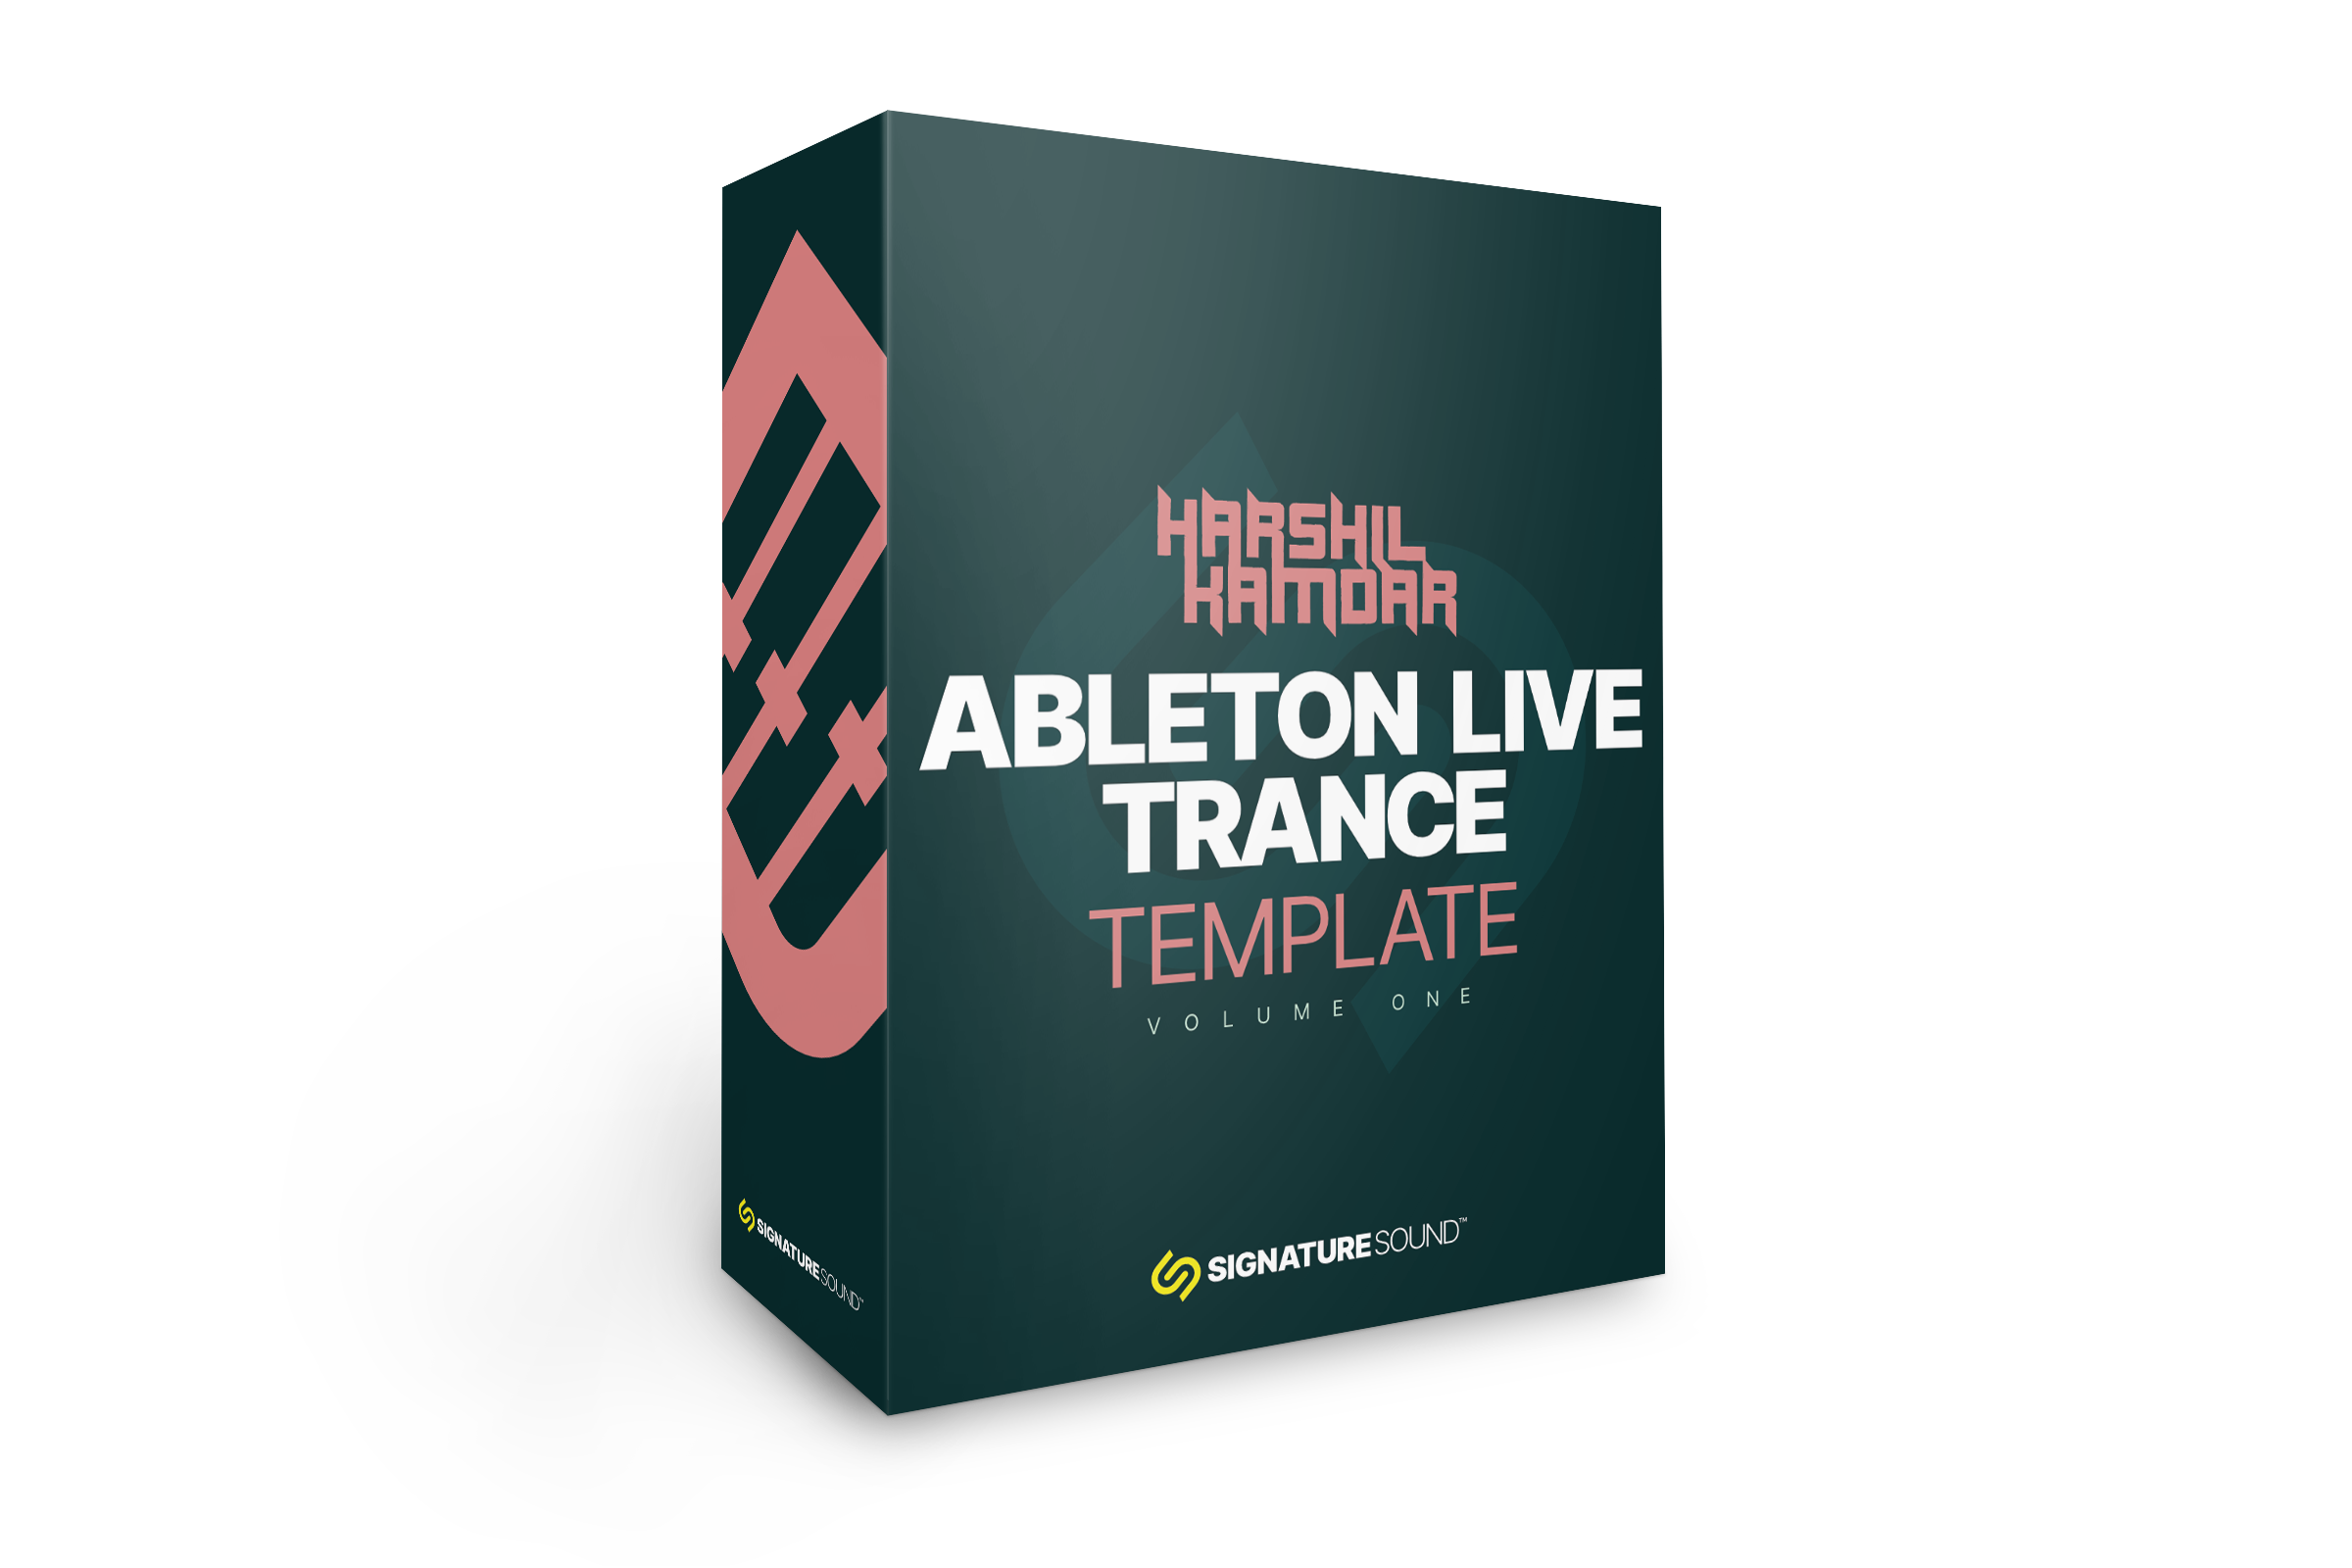 Harshil Kamdar Trance Template [Ableton Live] Volume One